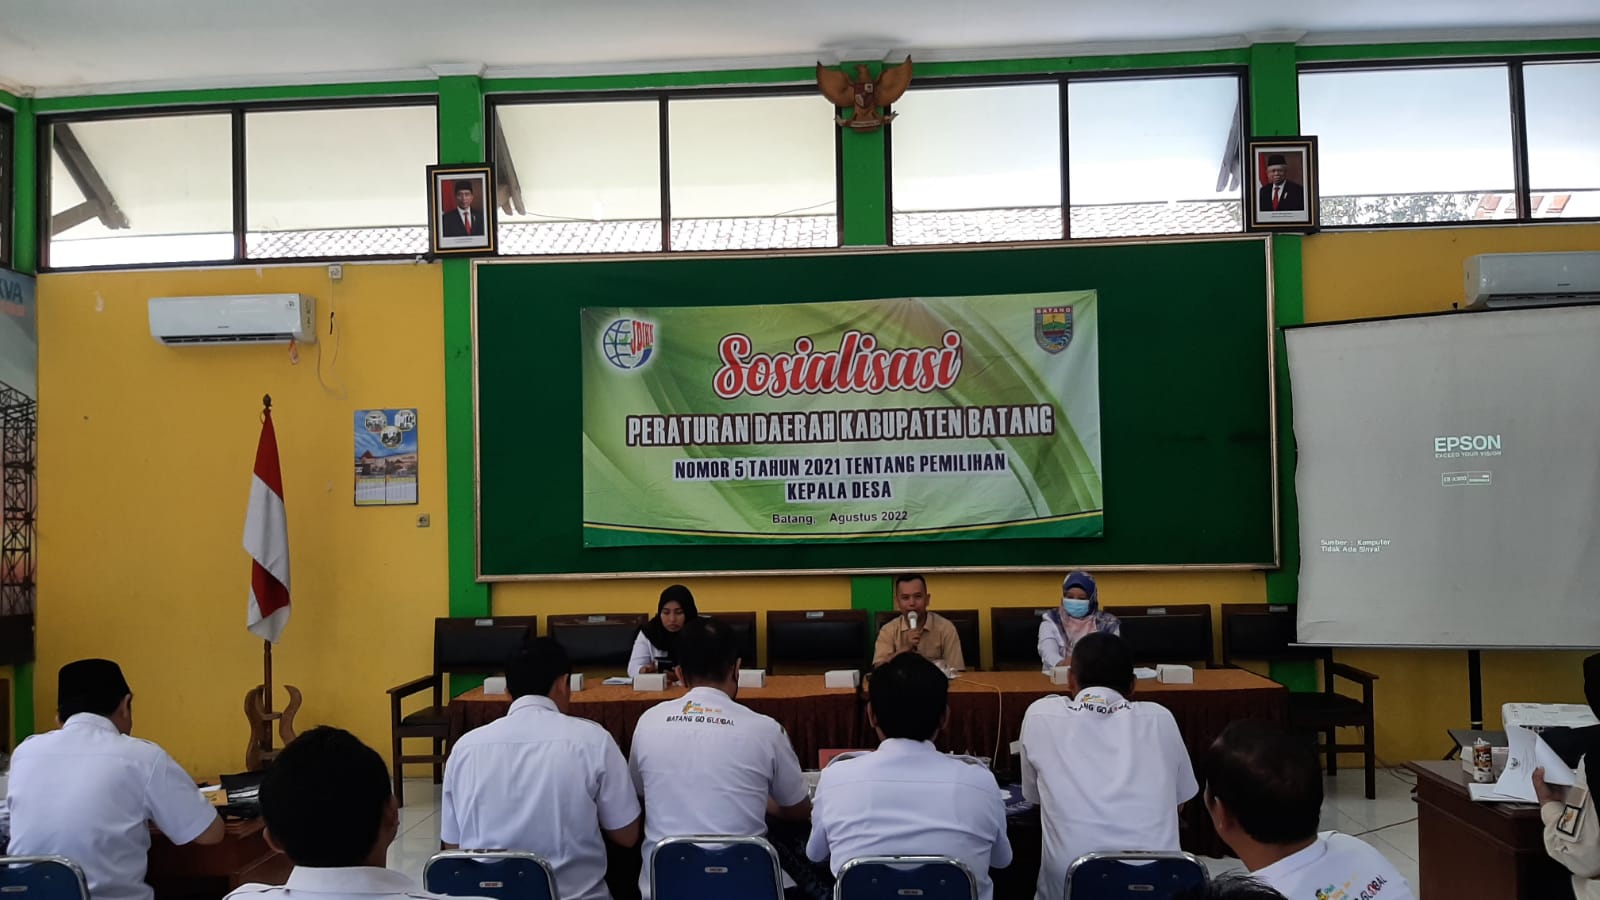 <h4><b>Sosialisasi Peraturan Daerah Kabupaten Batang di Kecamatan Tulis</b></h4>